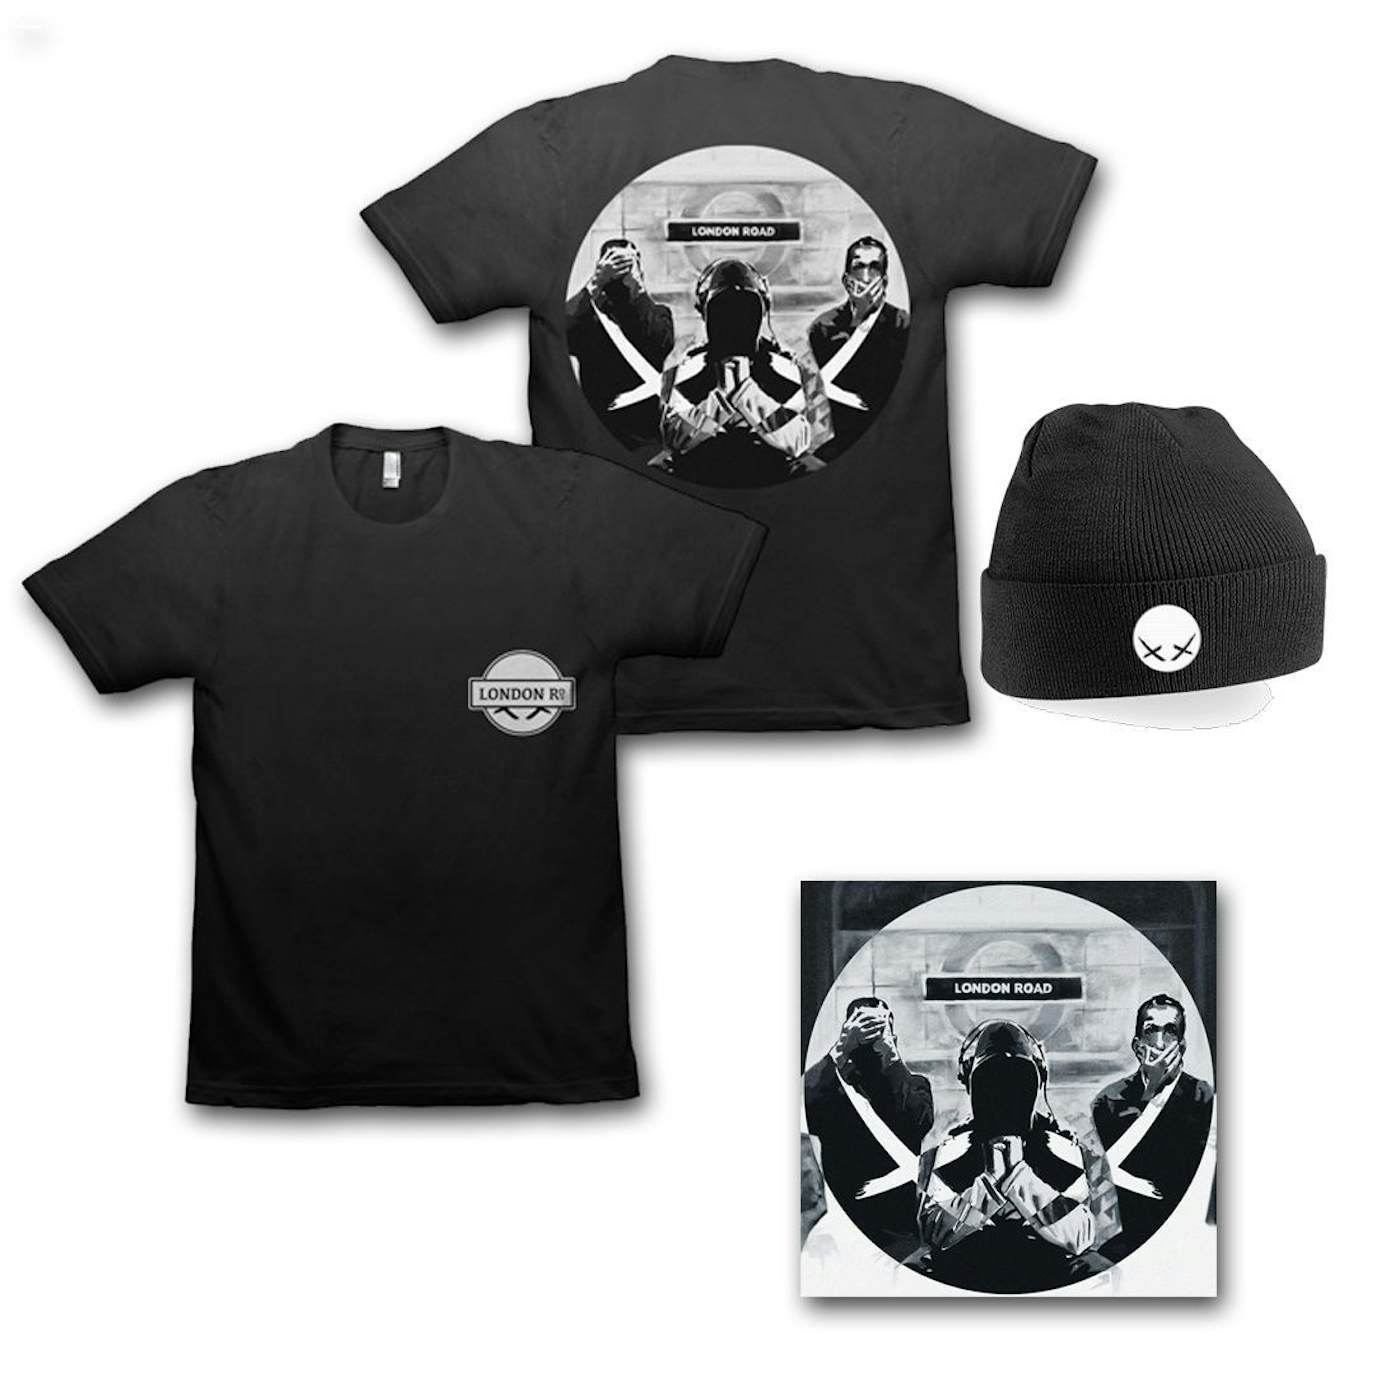 Modestep London Road CD + T-Shirt + Beanie Bundle